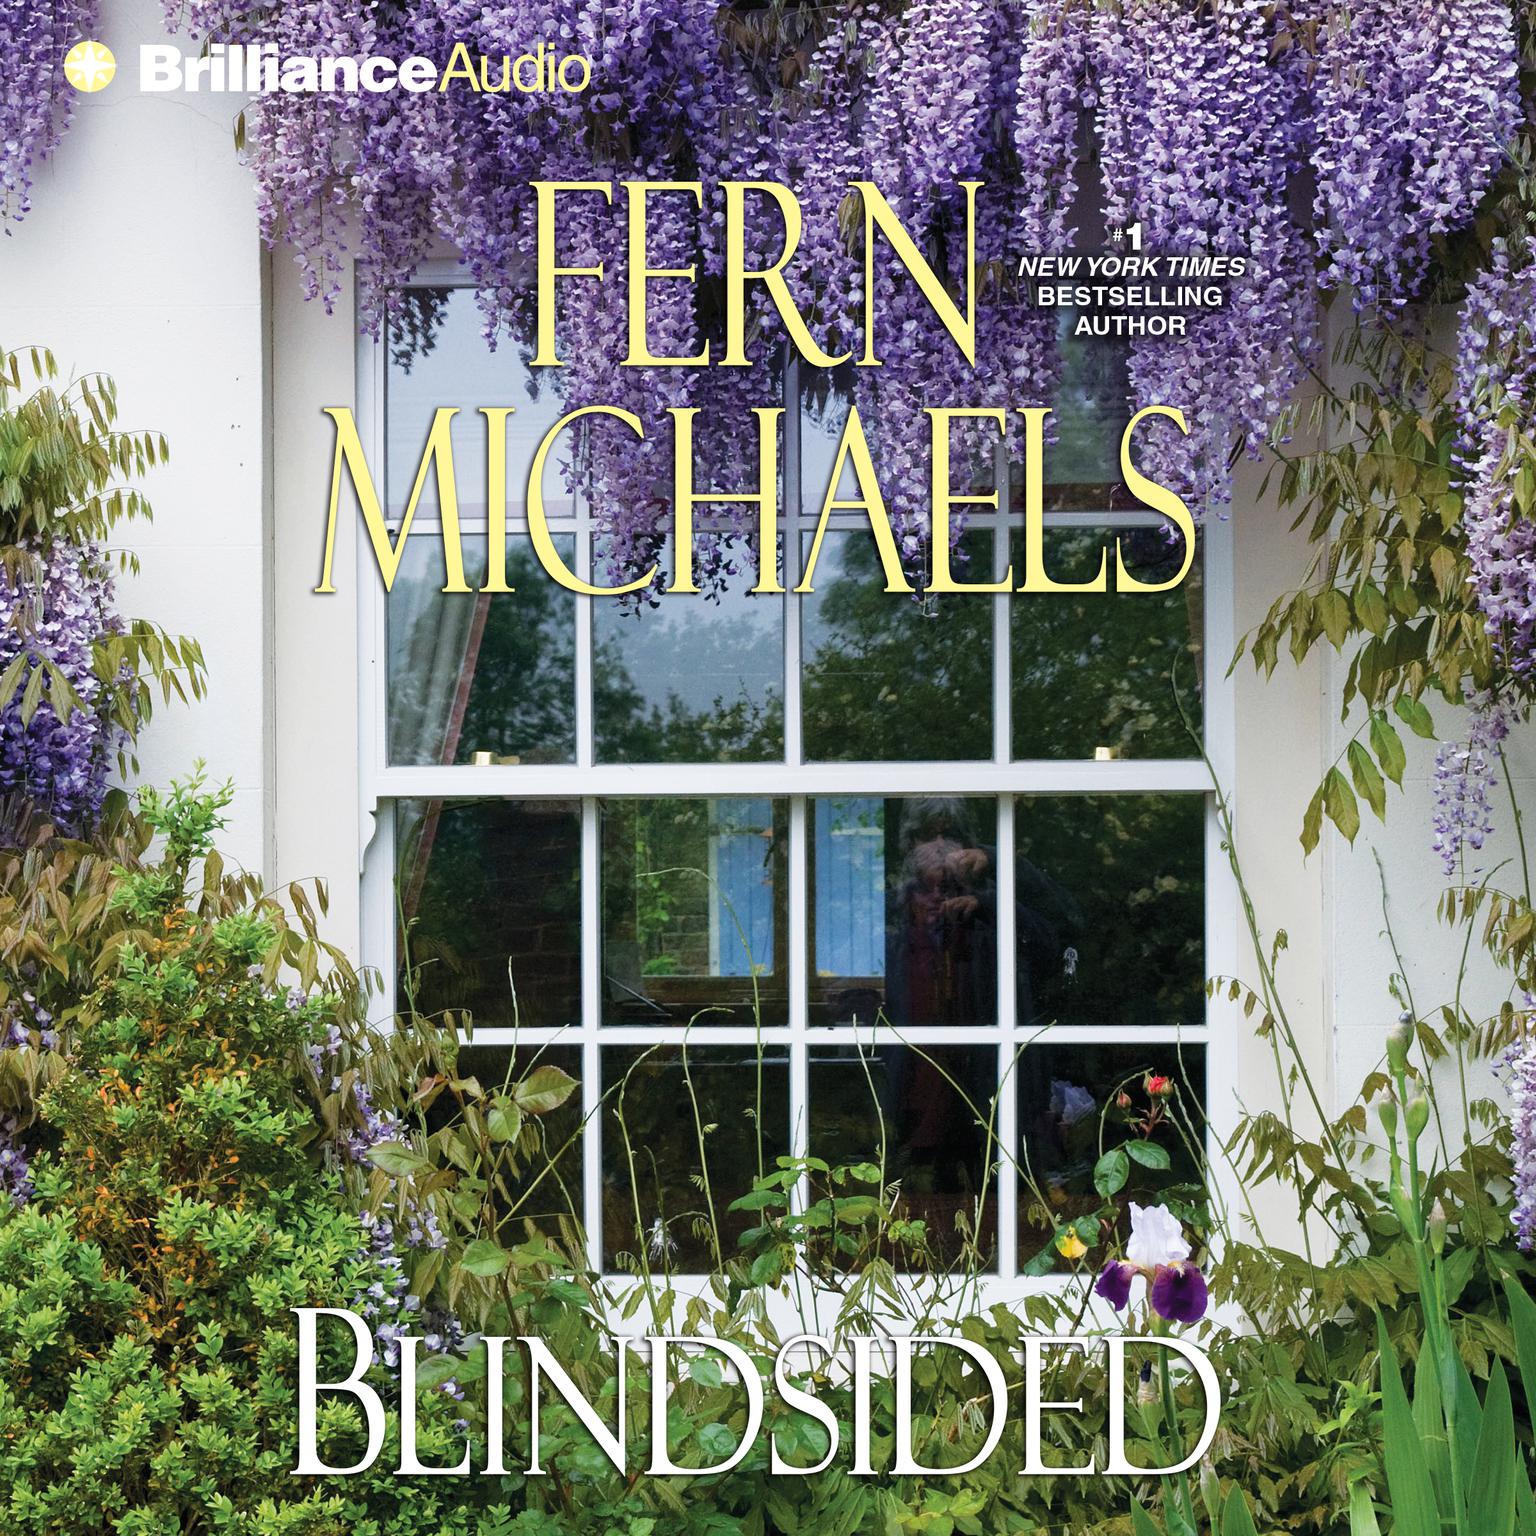 Blindsided (Abridged) Audiobook, by Fern Michaels